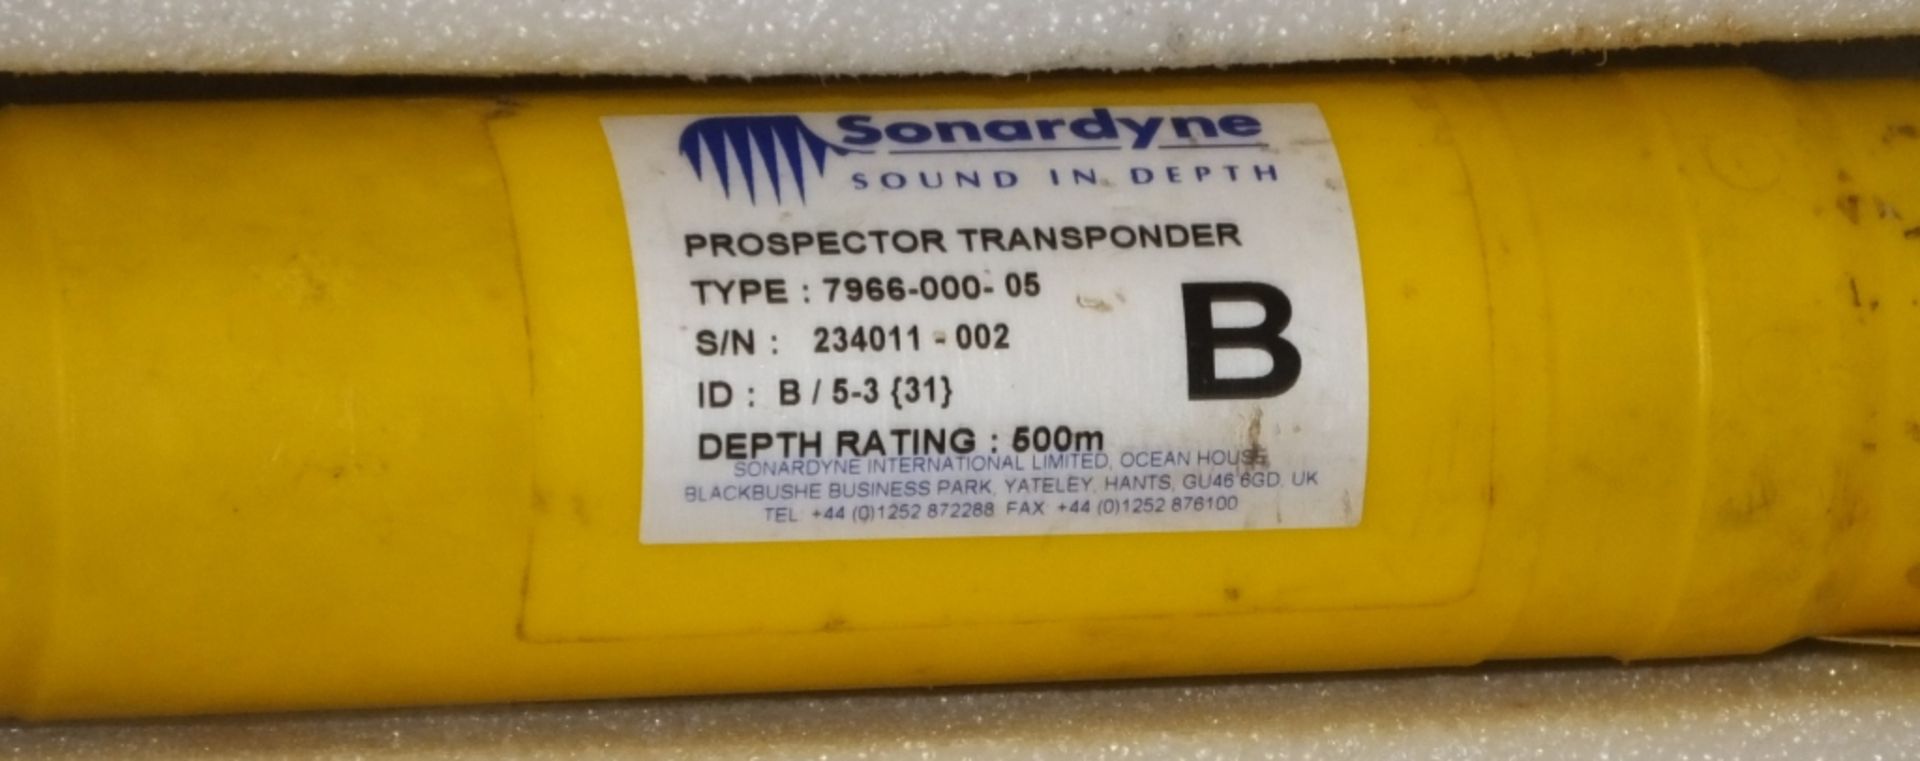 Ex-MoD Sonardyne ISBL System - 1x USBL Transceiver type 8024-000-01 SN 233933-001, 4x Pros - Image 5 of 7